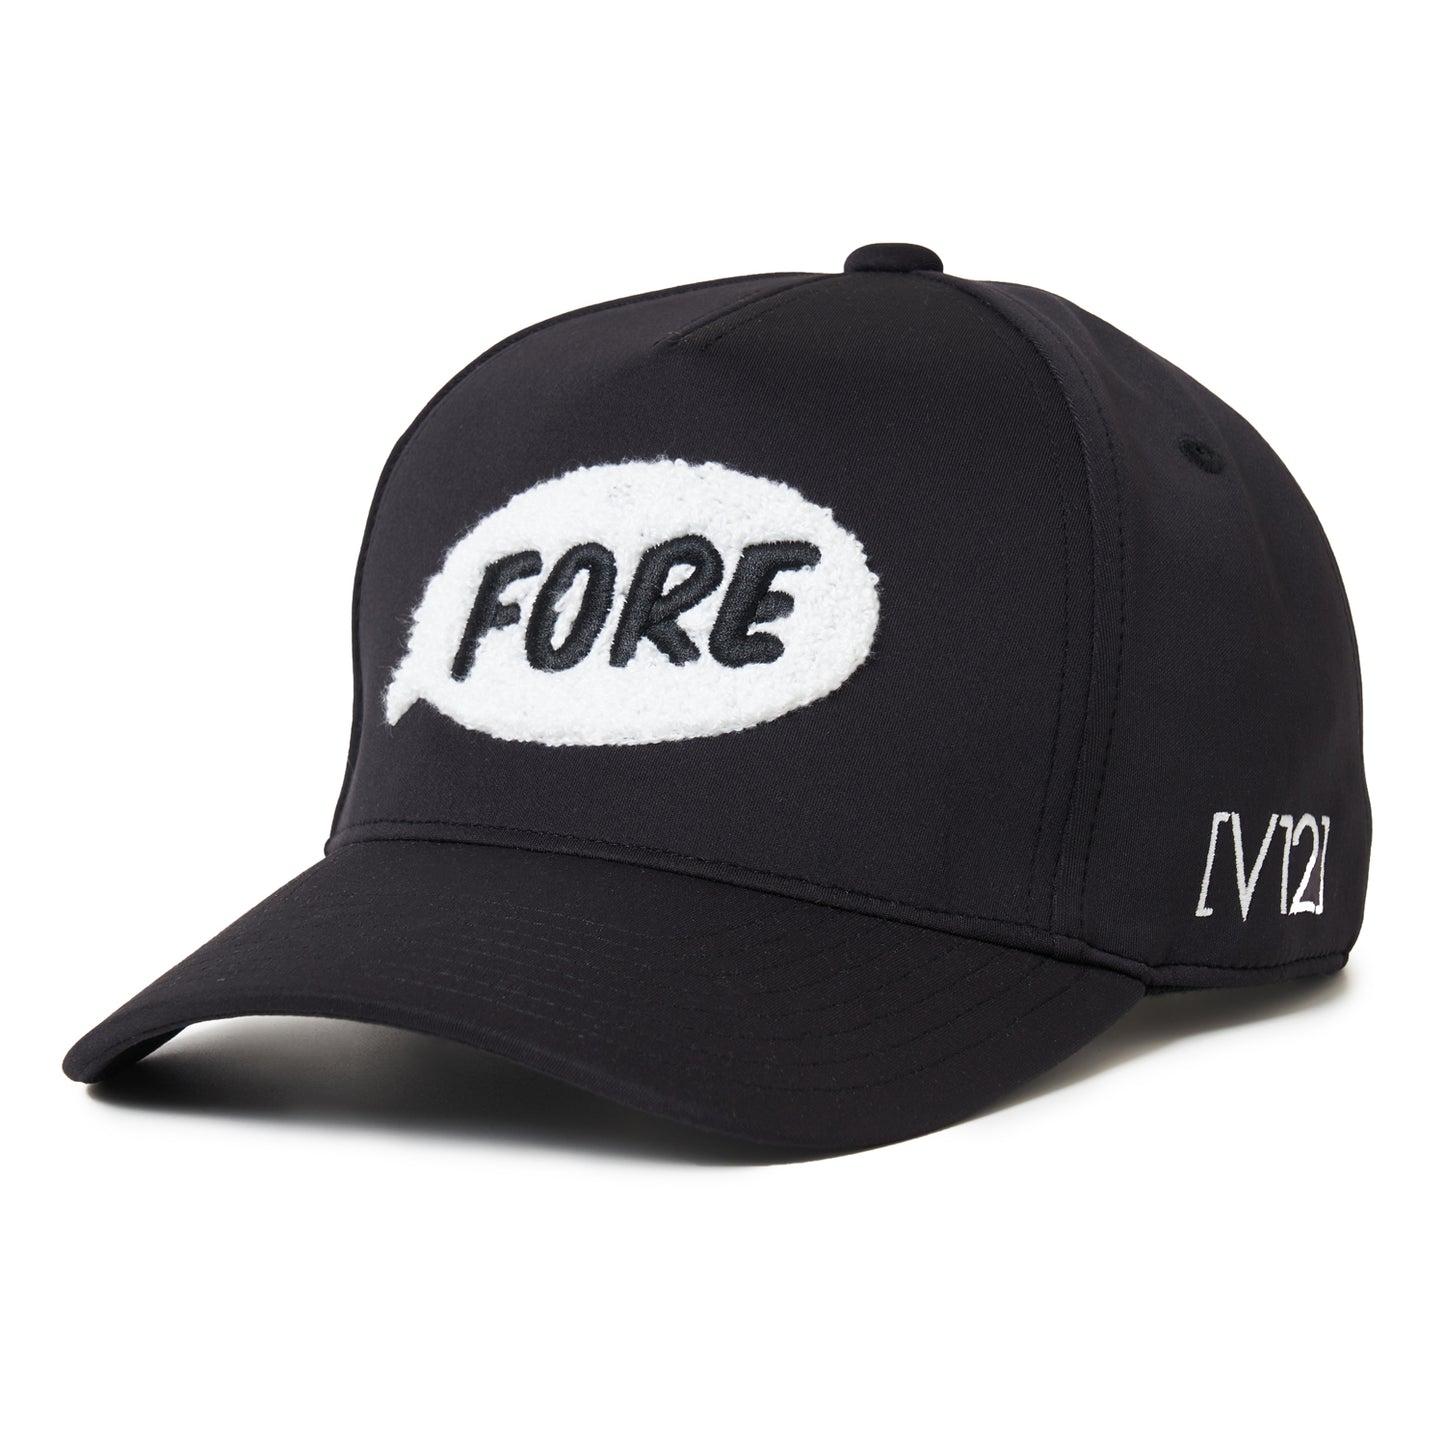 FORE CAP